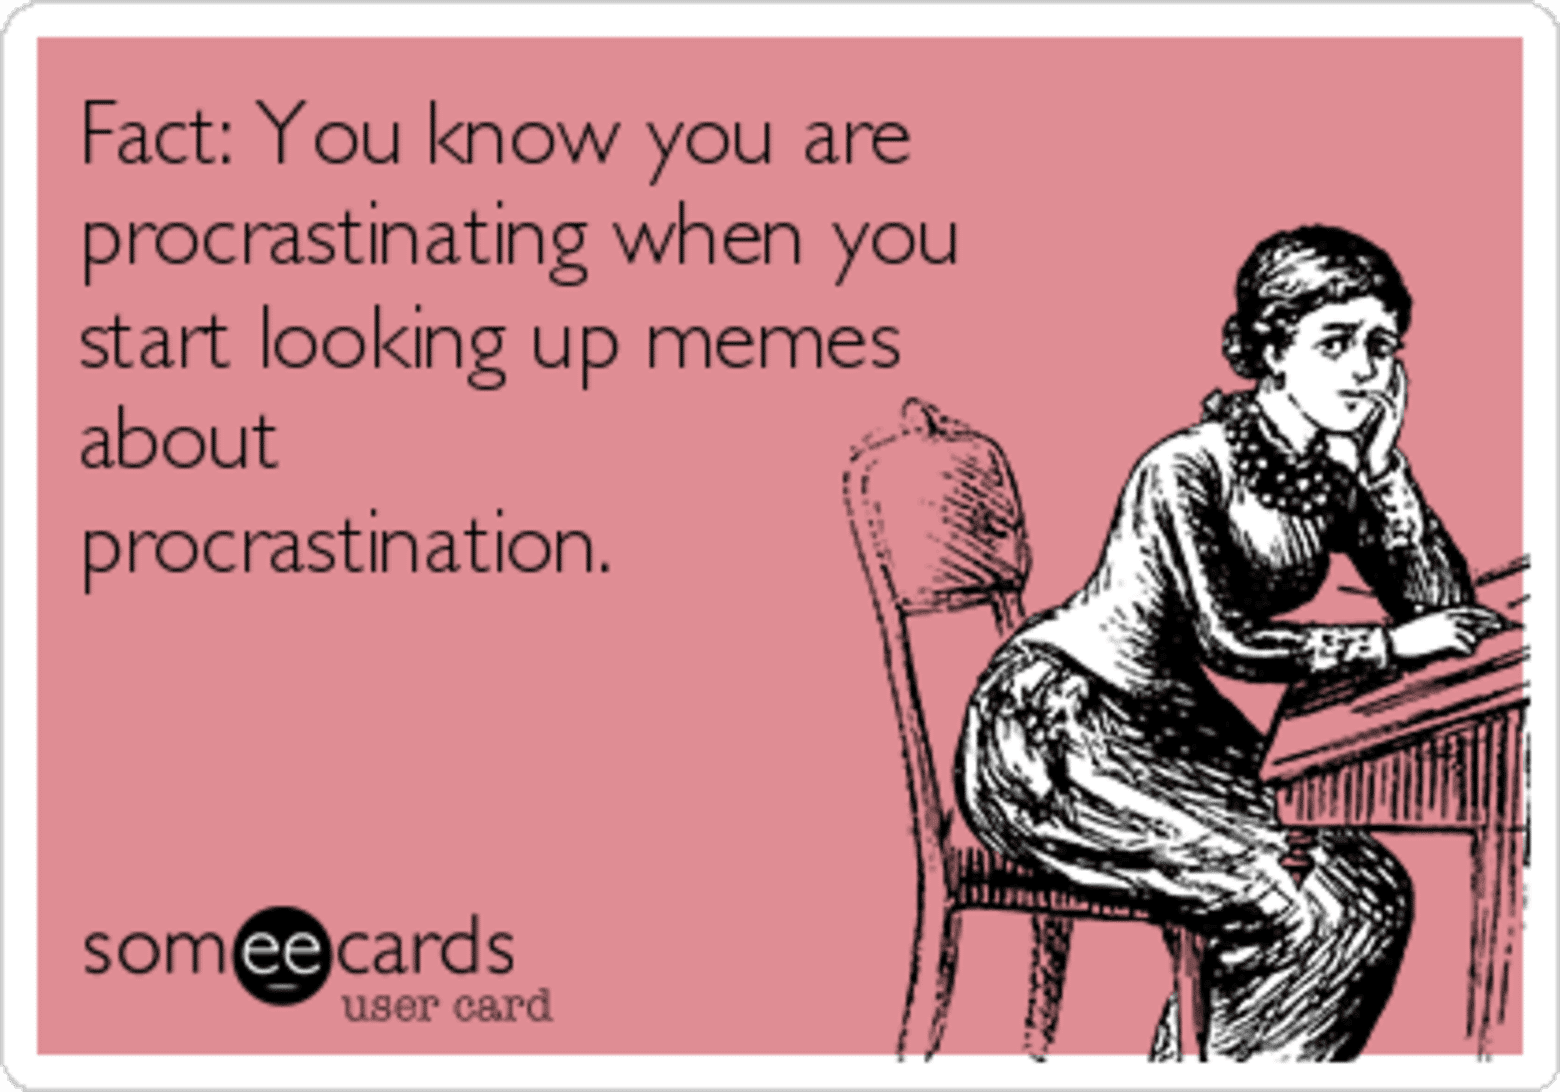 Is procrastination real?